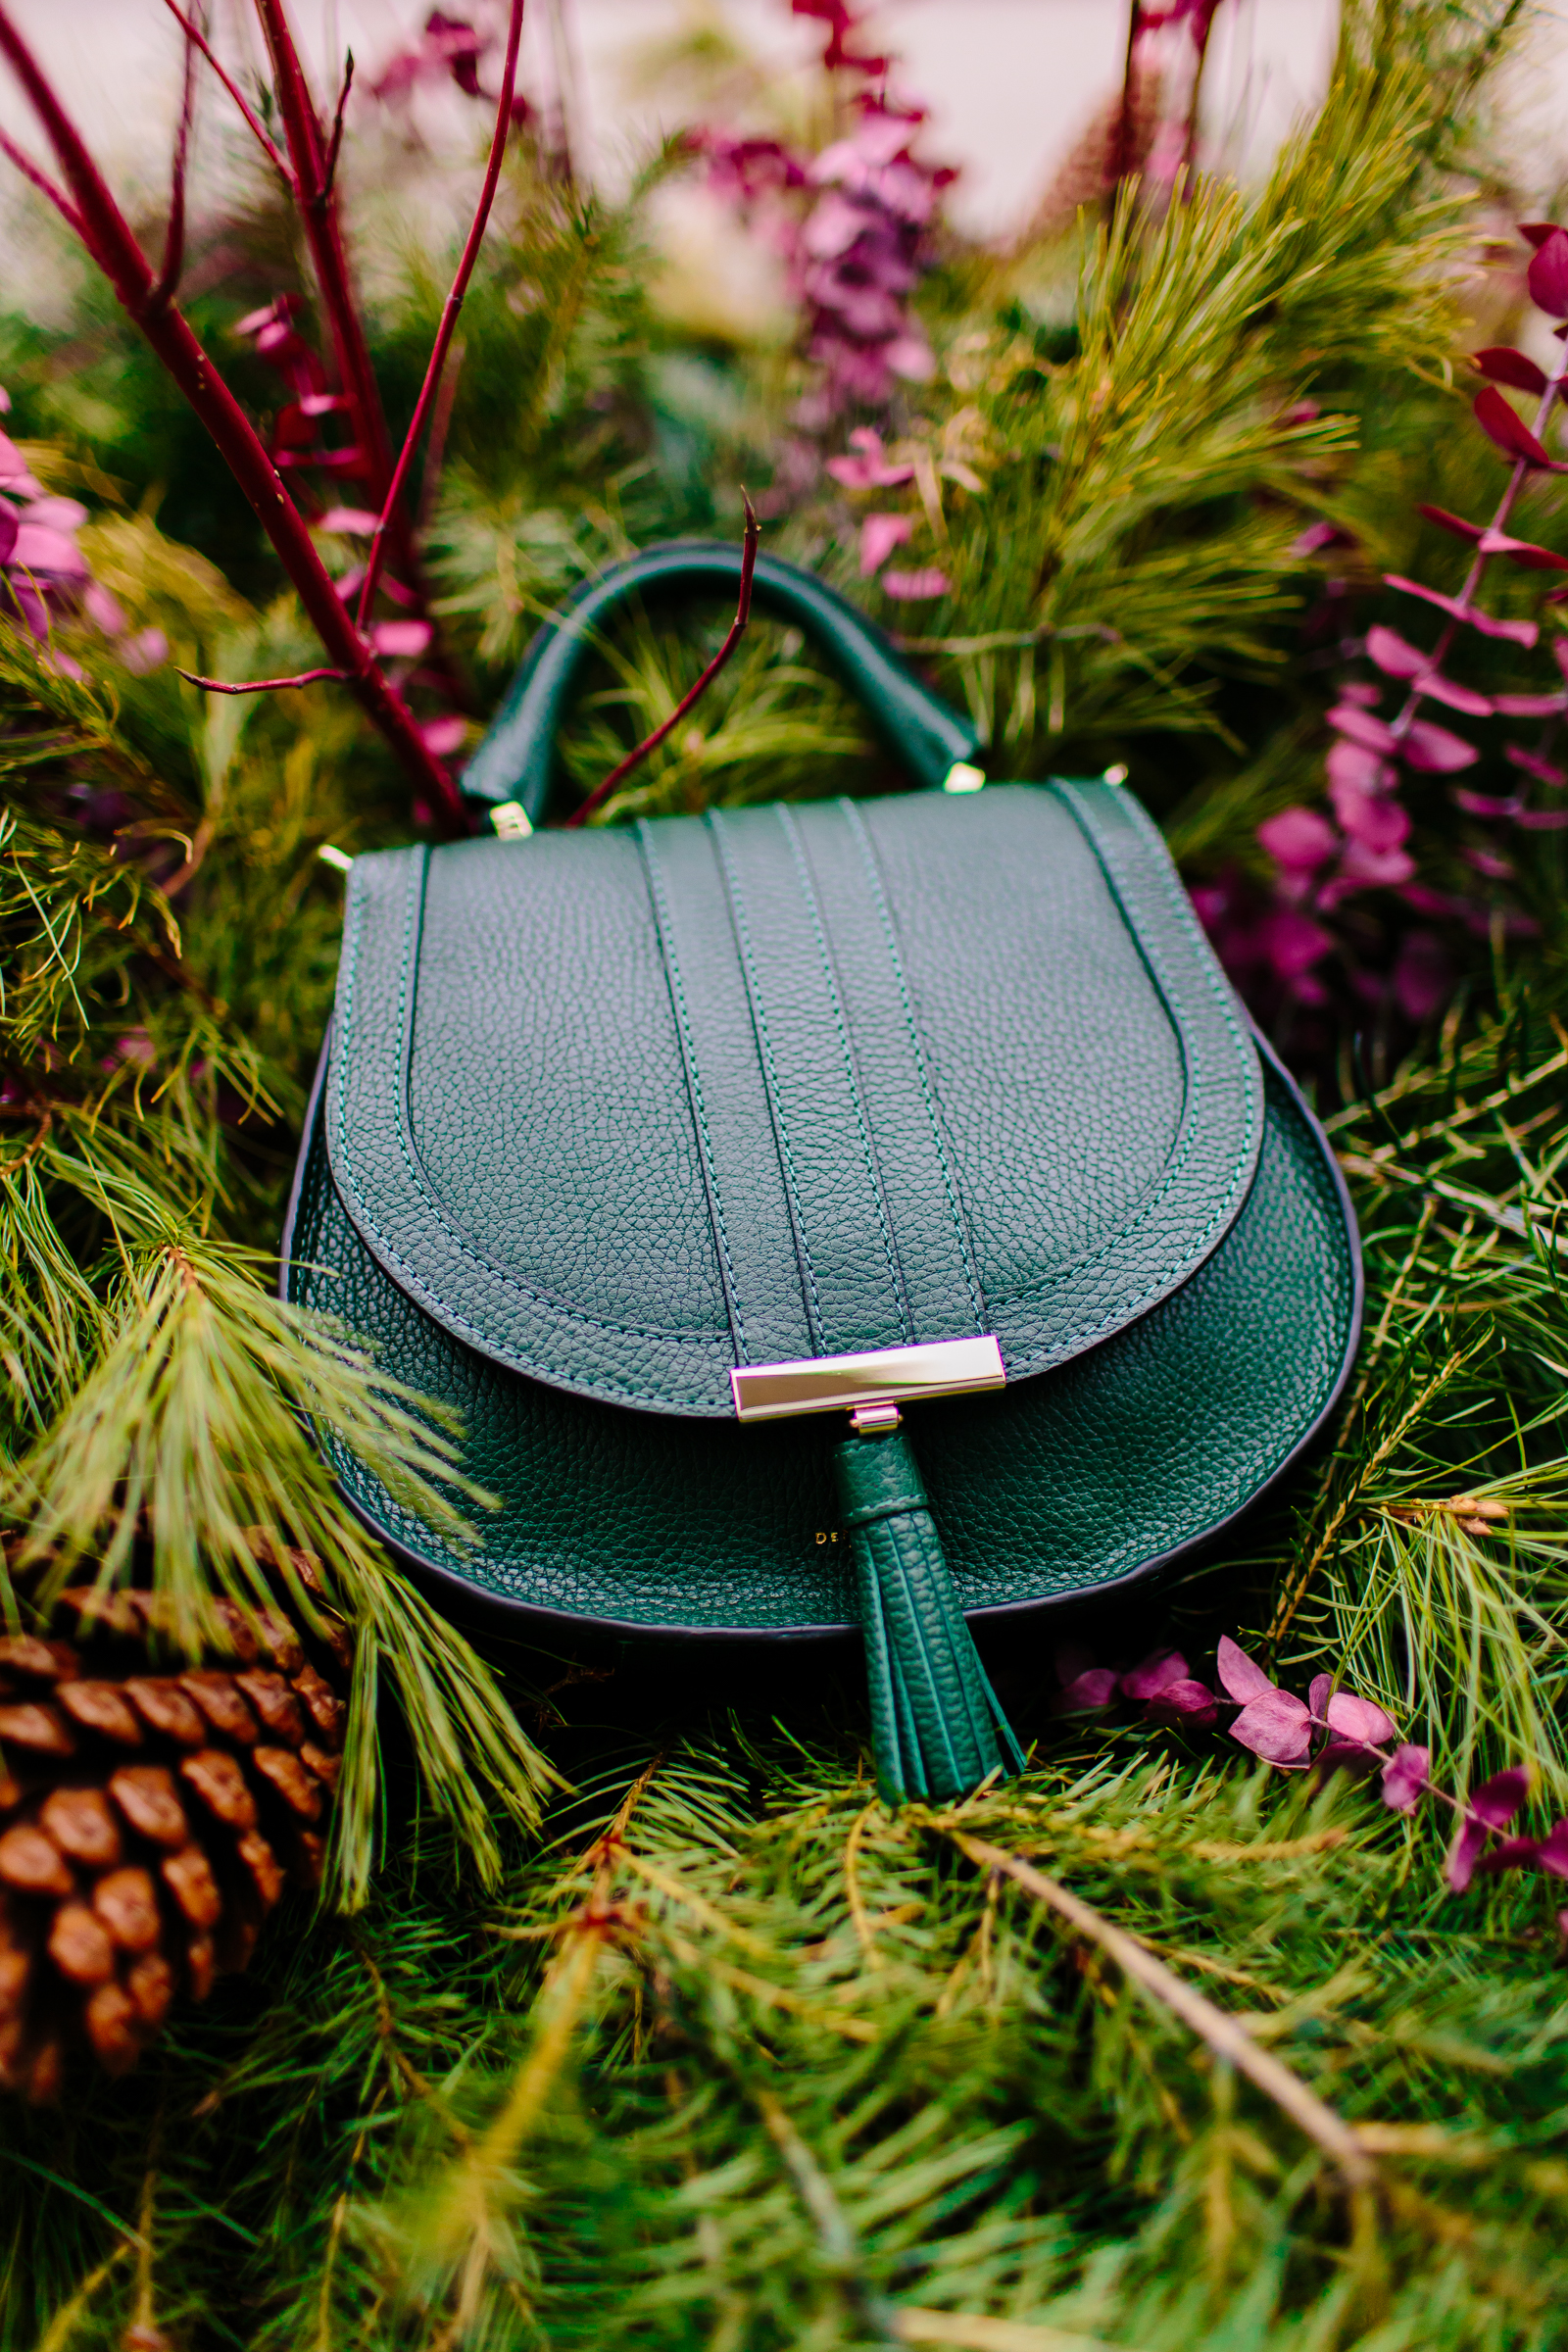 DeMellier Mini Venice Bag in Forest Green, Tia Perciballi Fashion & Lifestyle Blog